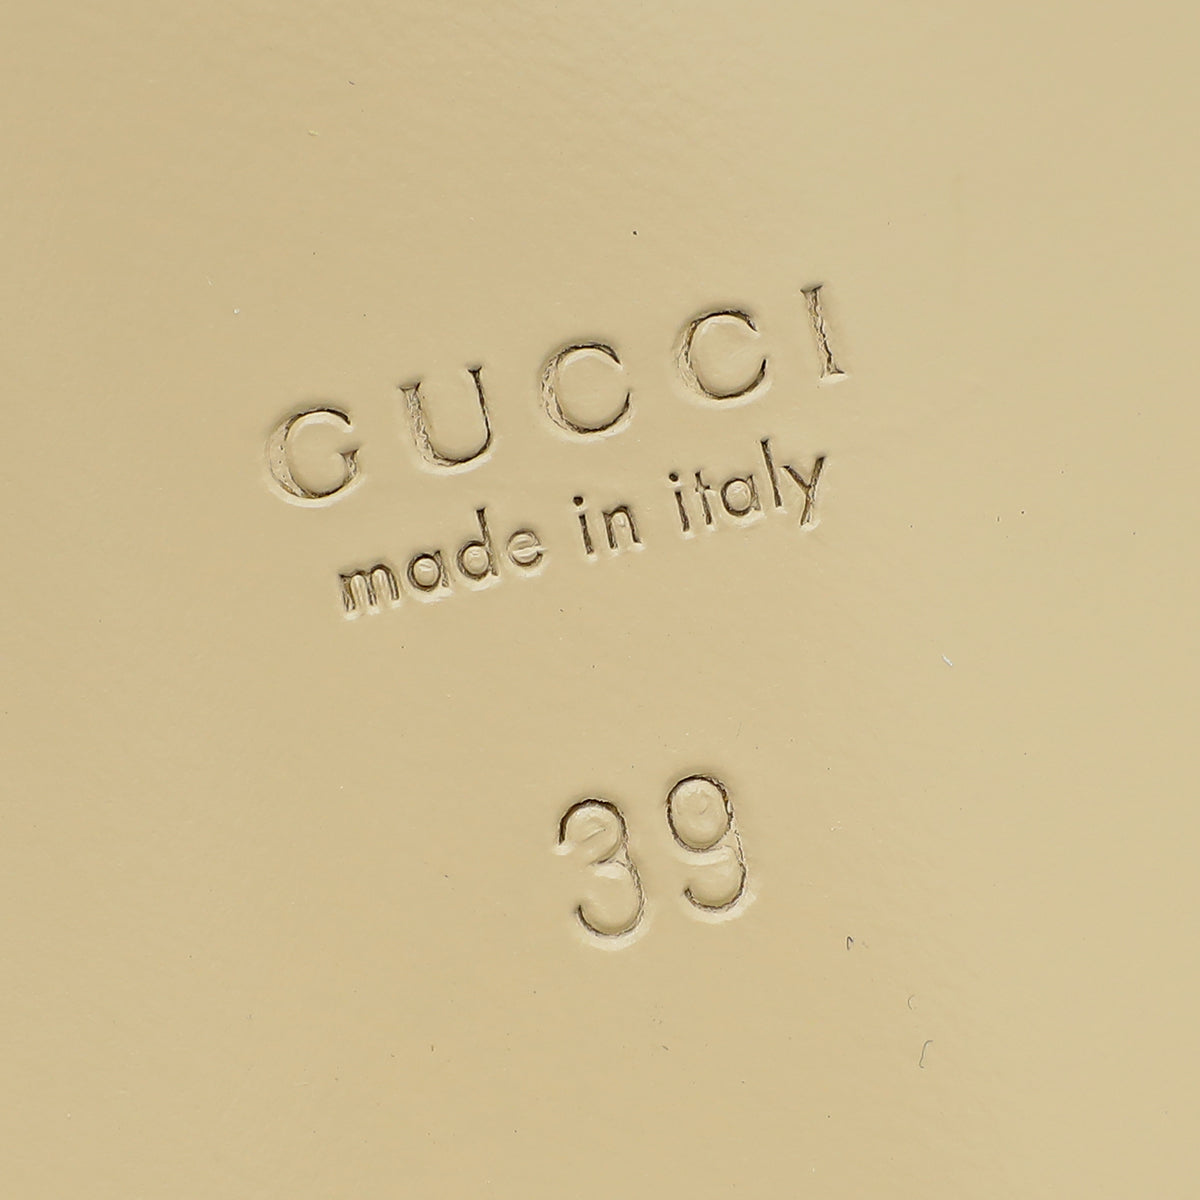 Gucci Green Interlocking G Cutout Flat Sandal 39